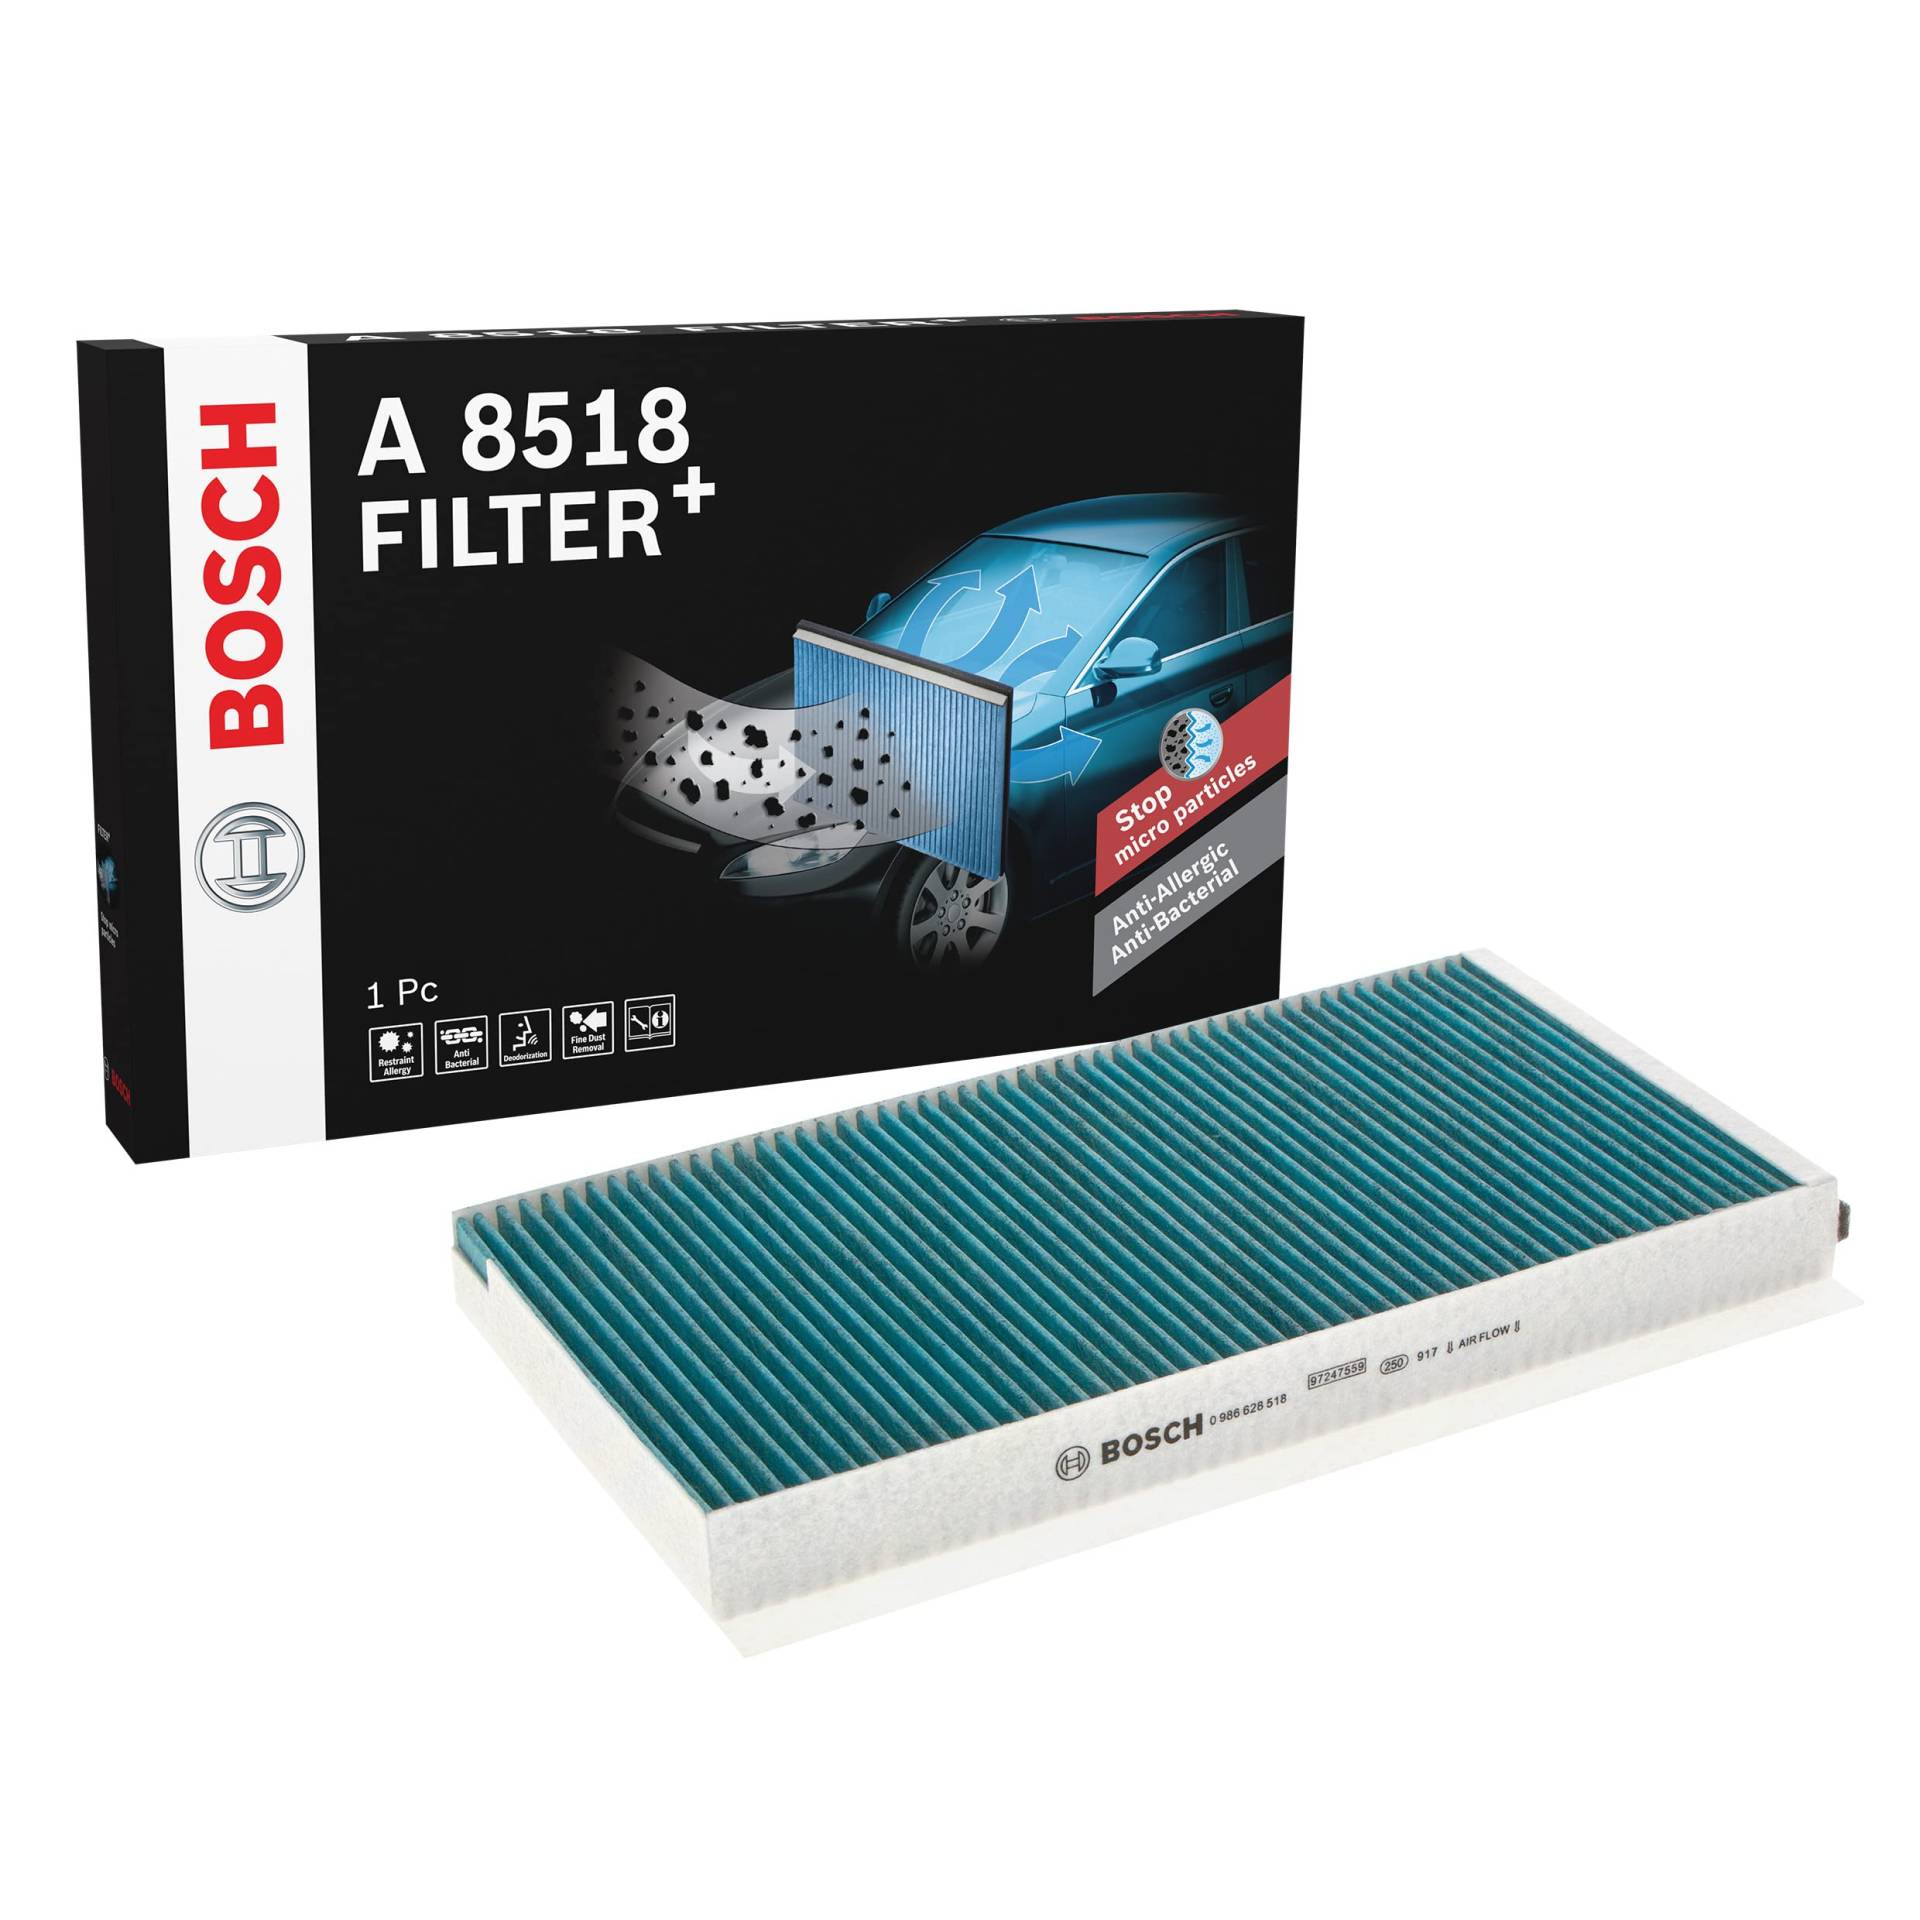 Bosch A8518 - Innenraumfilter Filter+ von Bosch Automotive